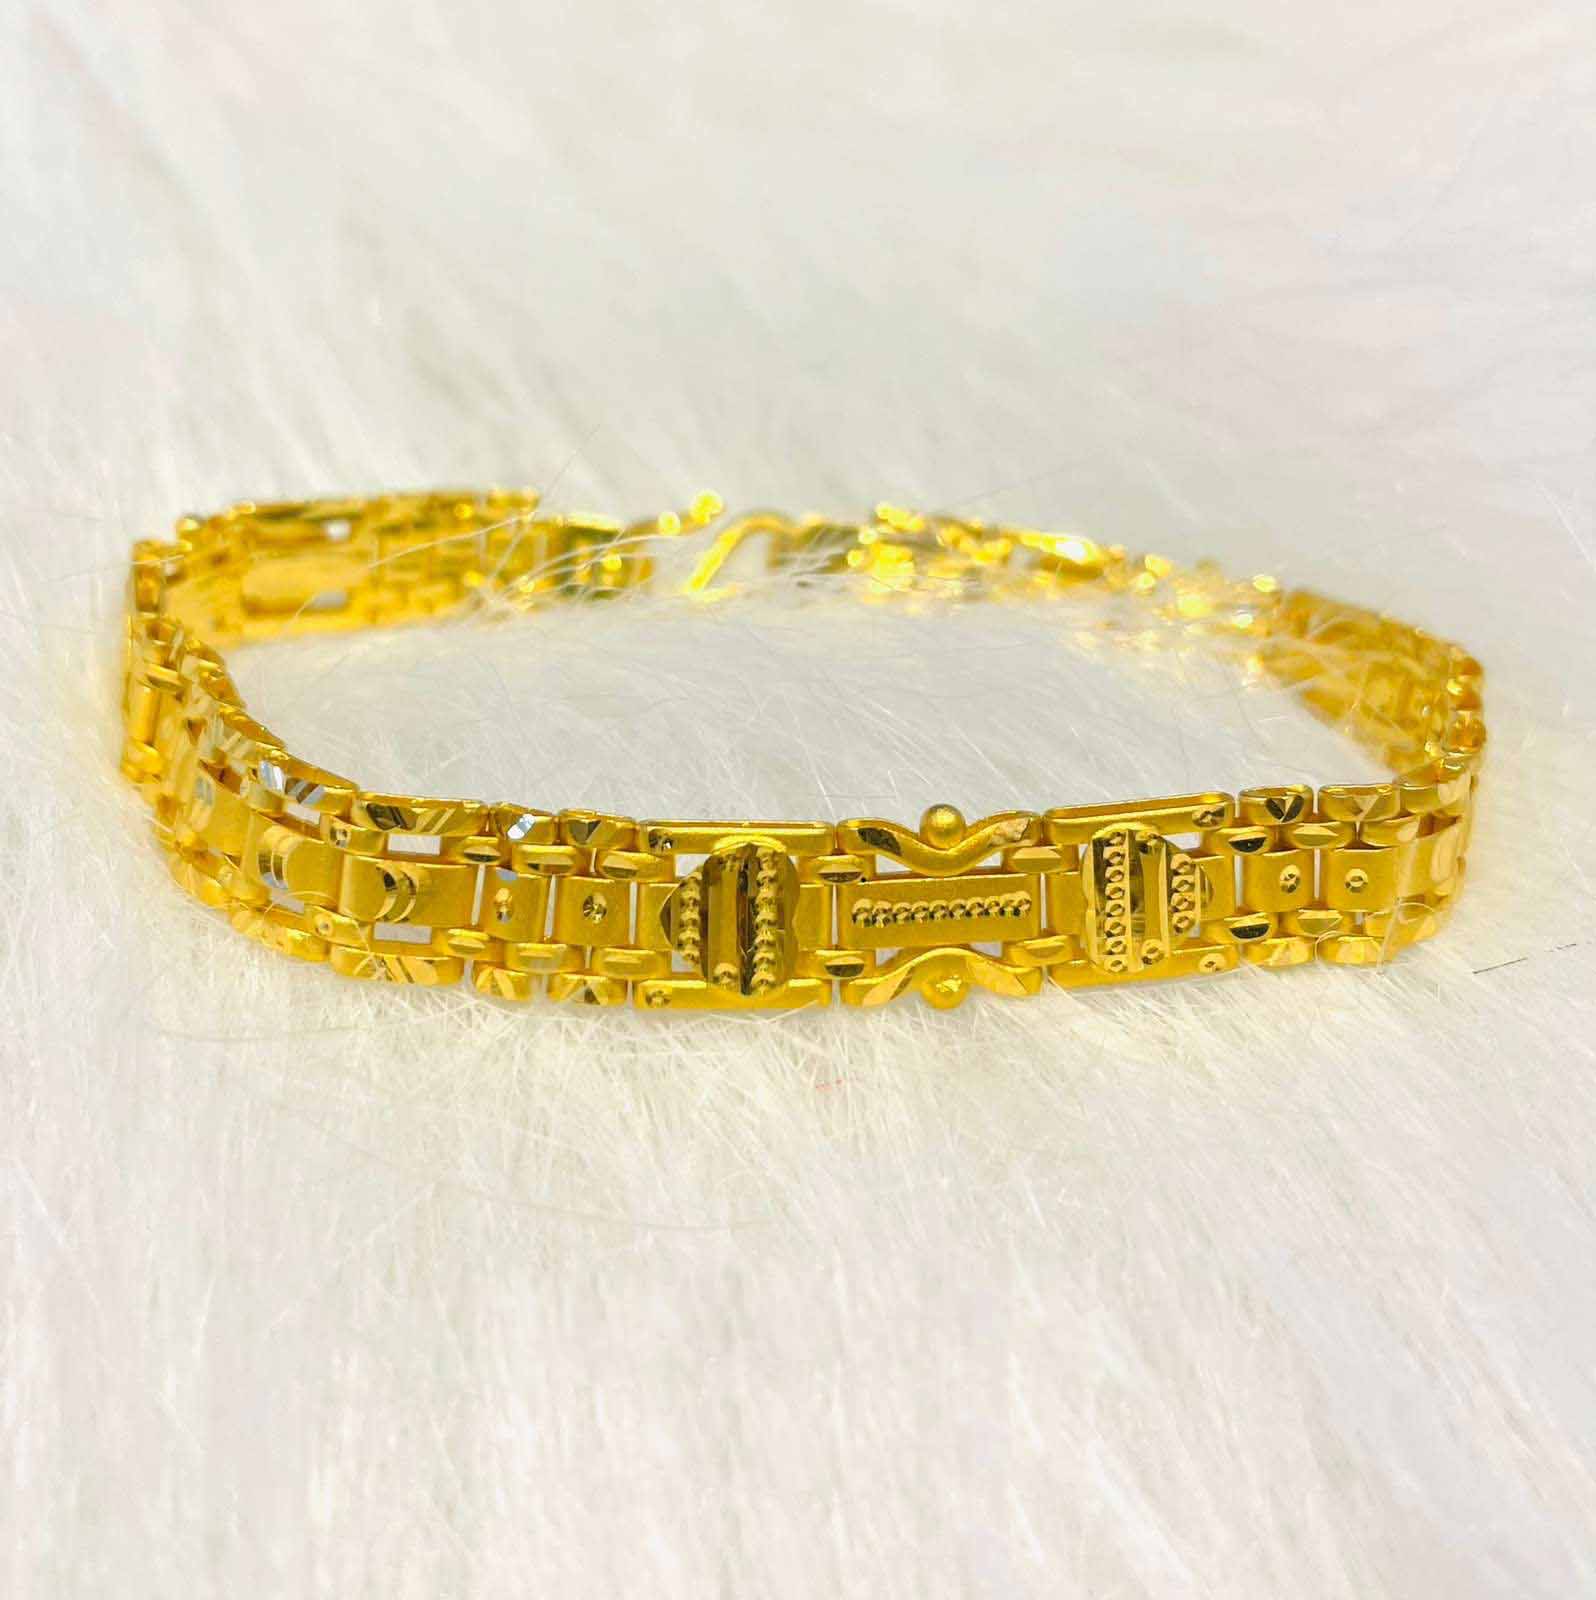 1 Gram Gold Plated Superior Quality Glamorous Design Bracelet For Men -  Style C499 at Rs 2850.00 | Gold Plated Bracelet | ID: 2850675926412